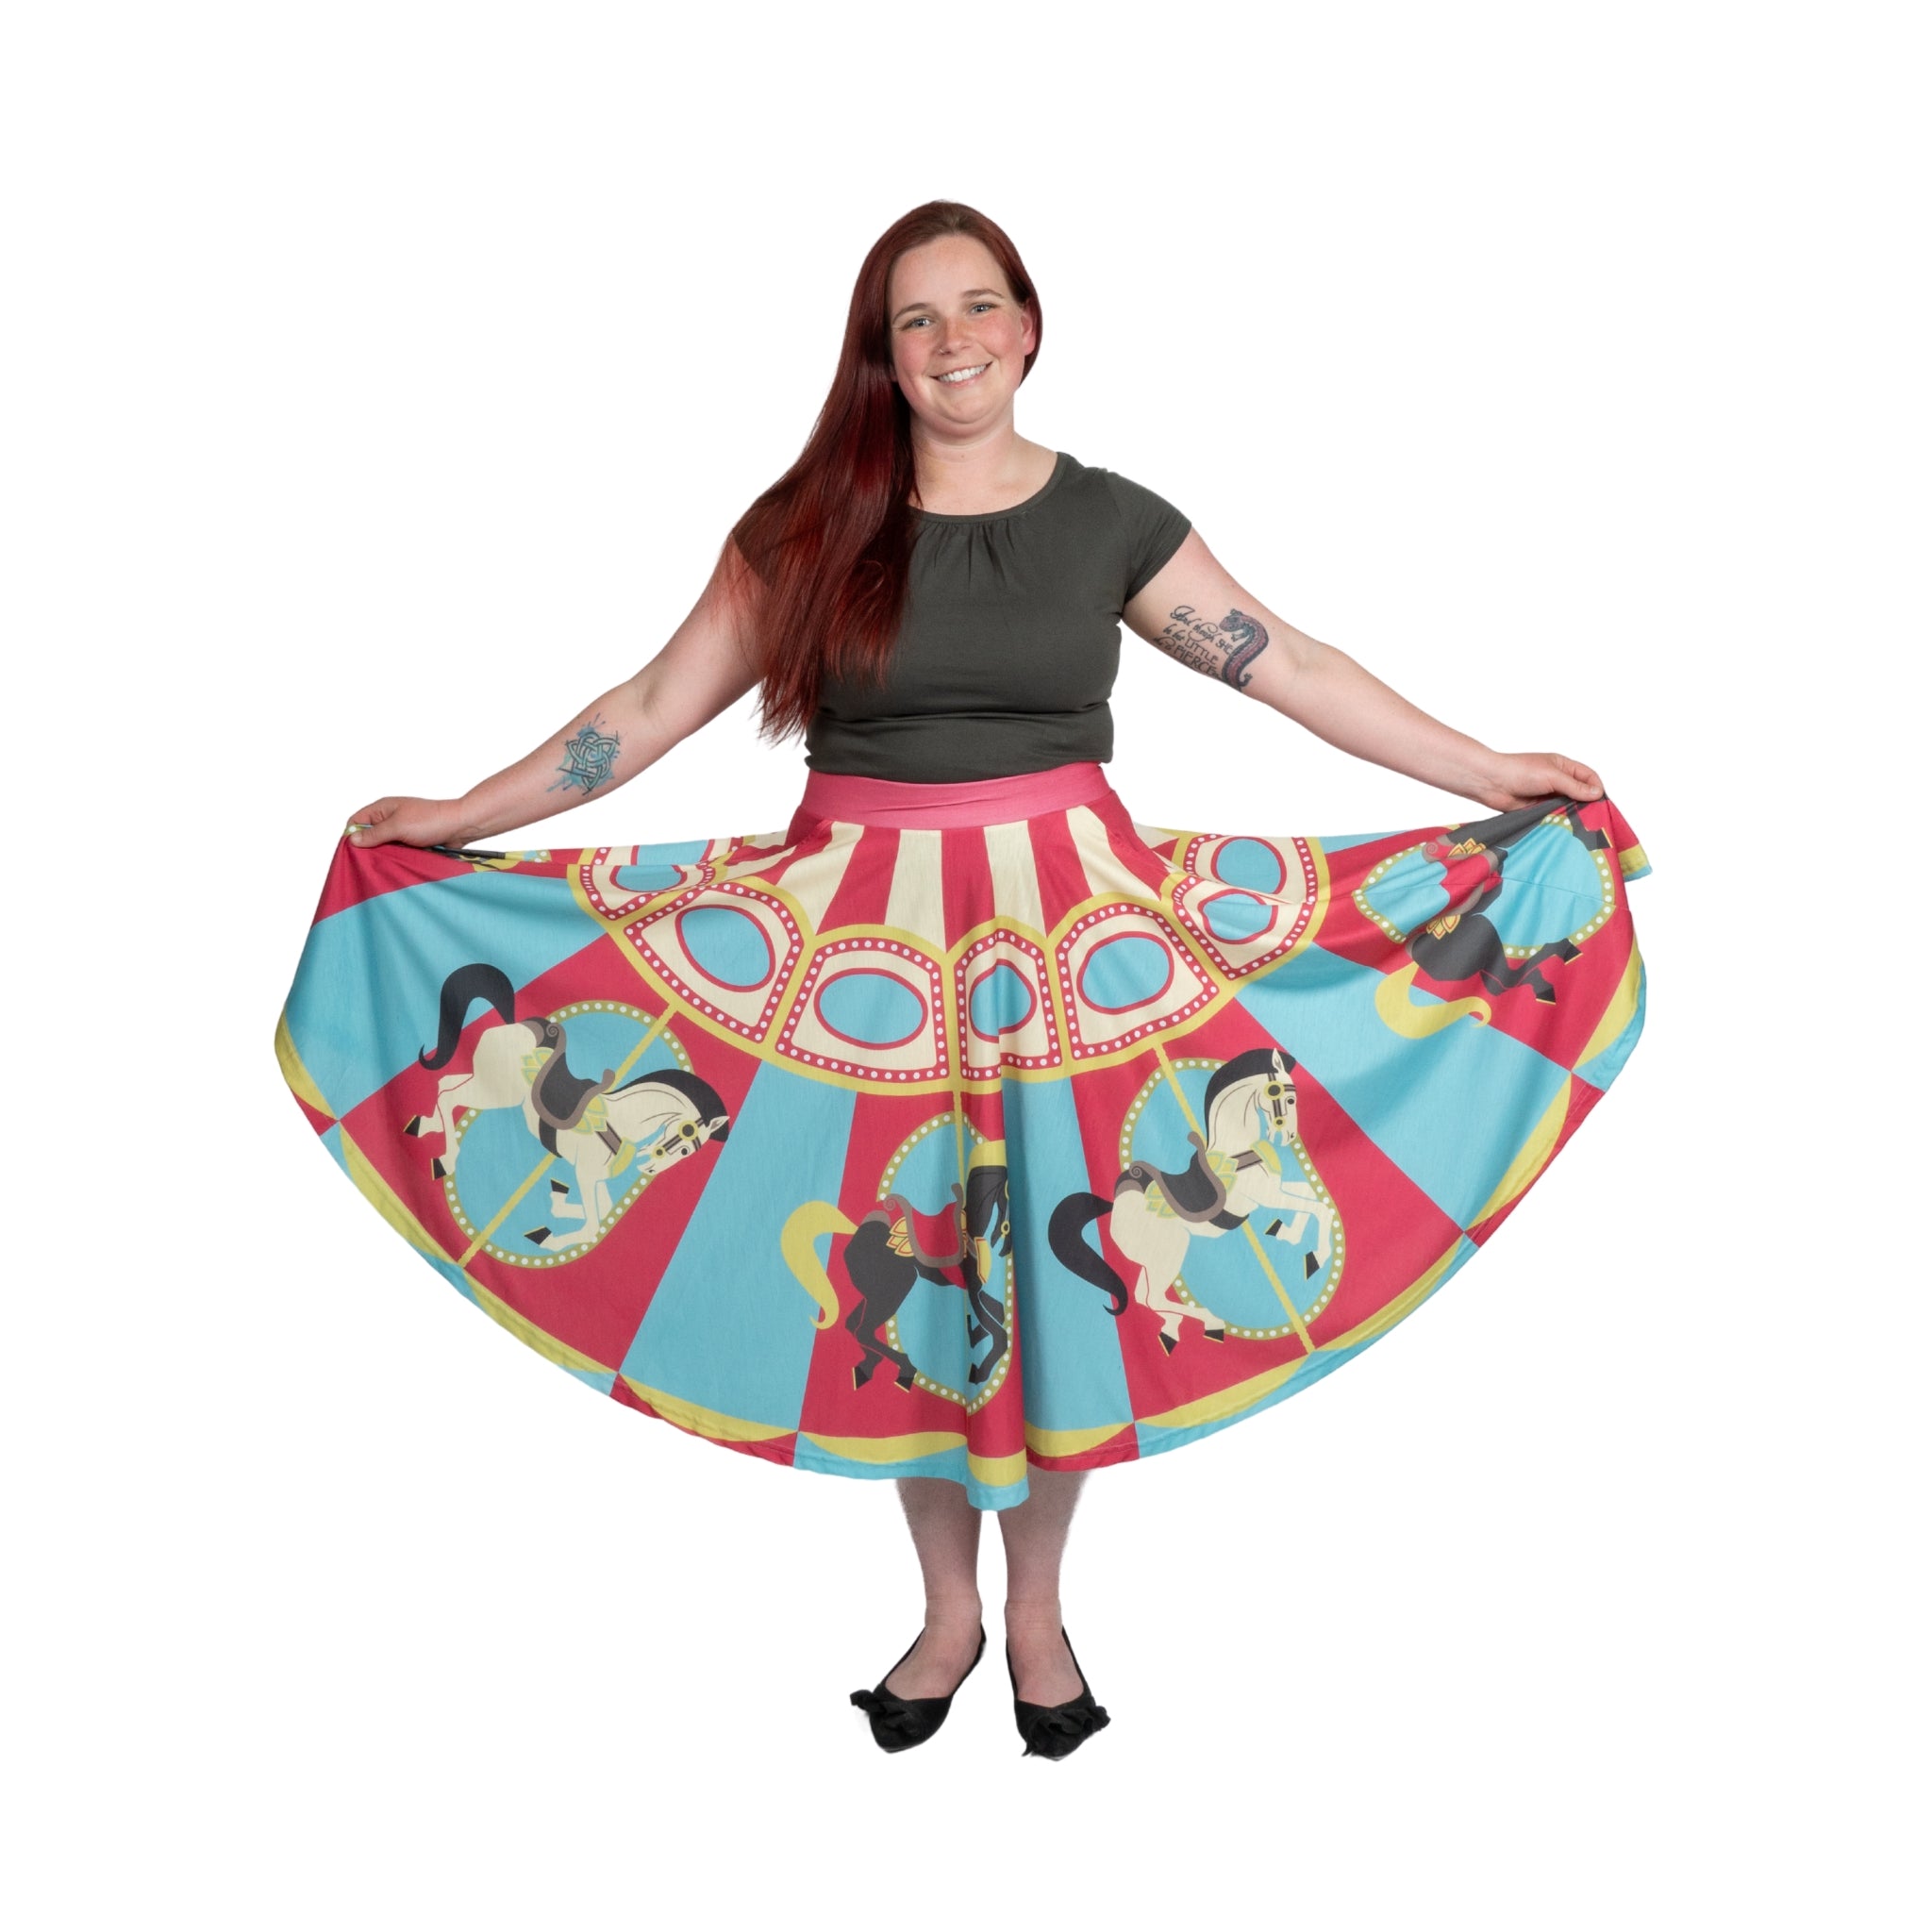 Merry-Go-Round Twirl Skirt